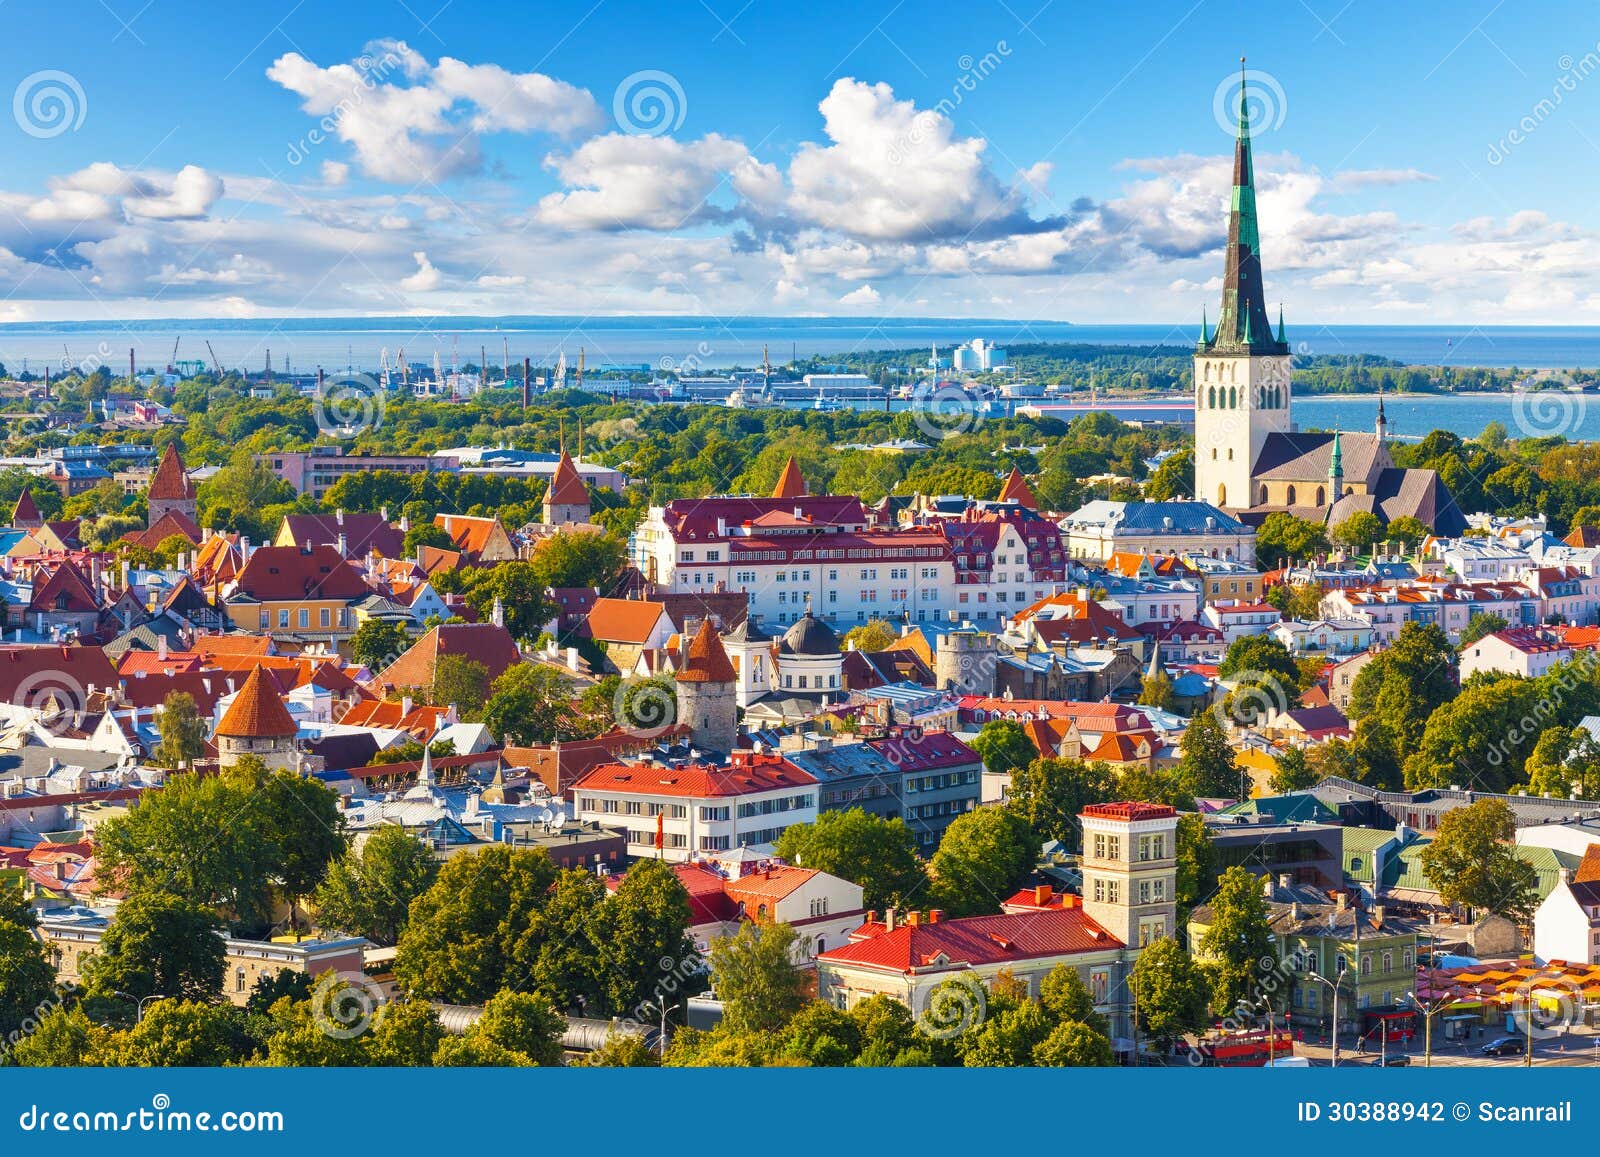 aerial panorama of tallinn, estonia